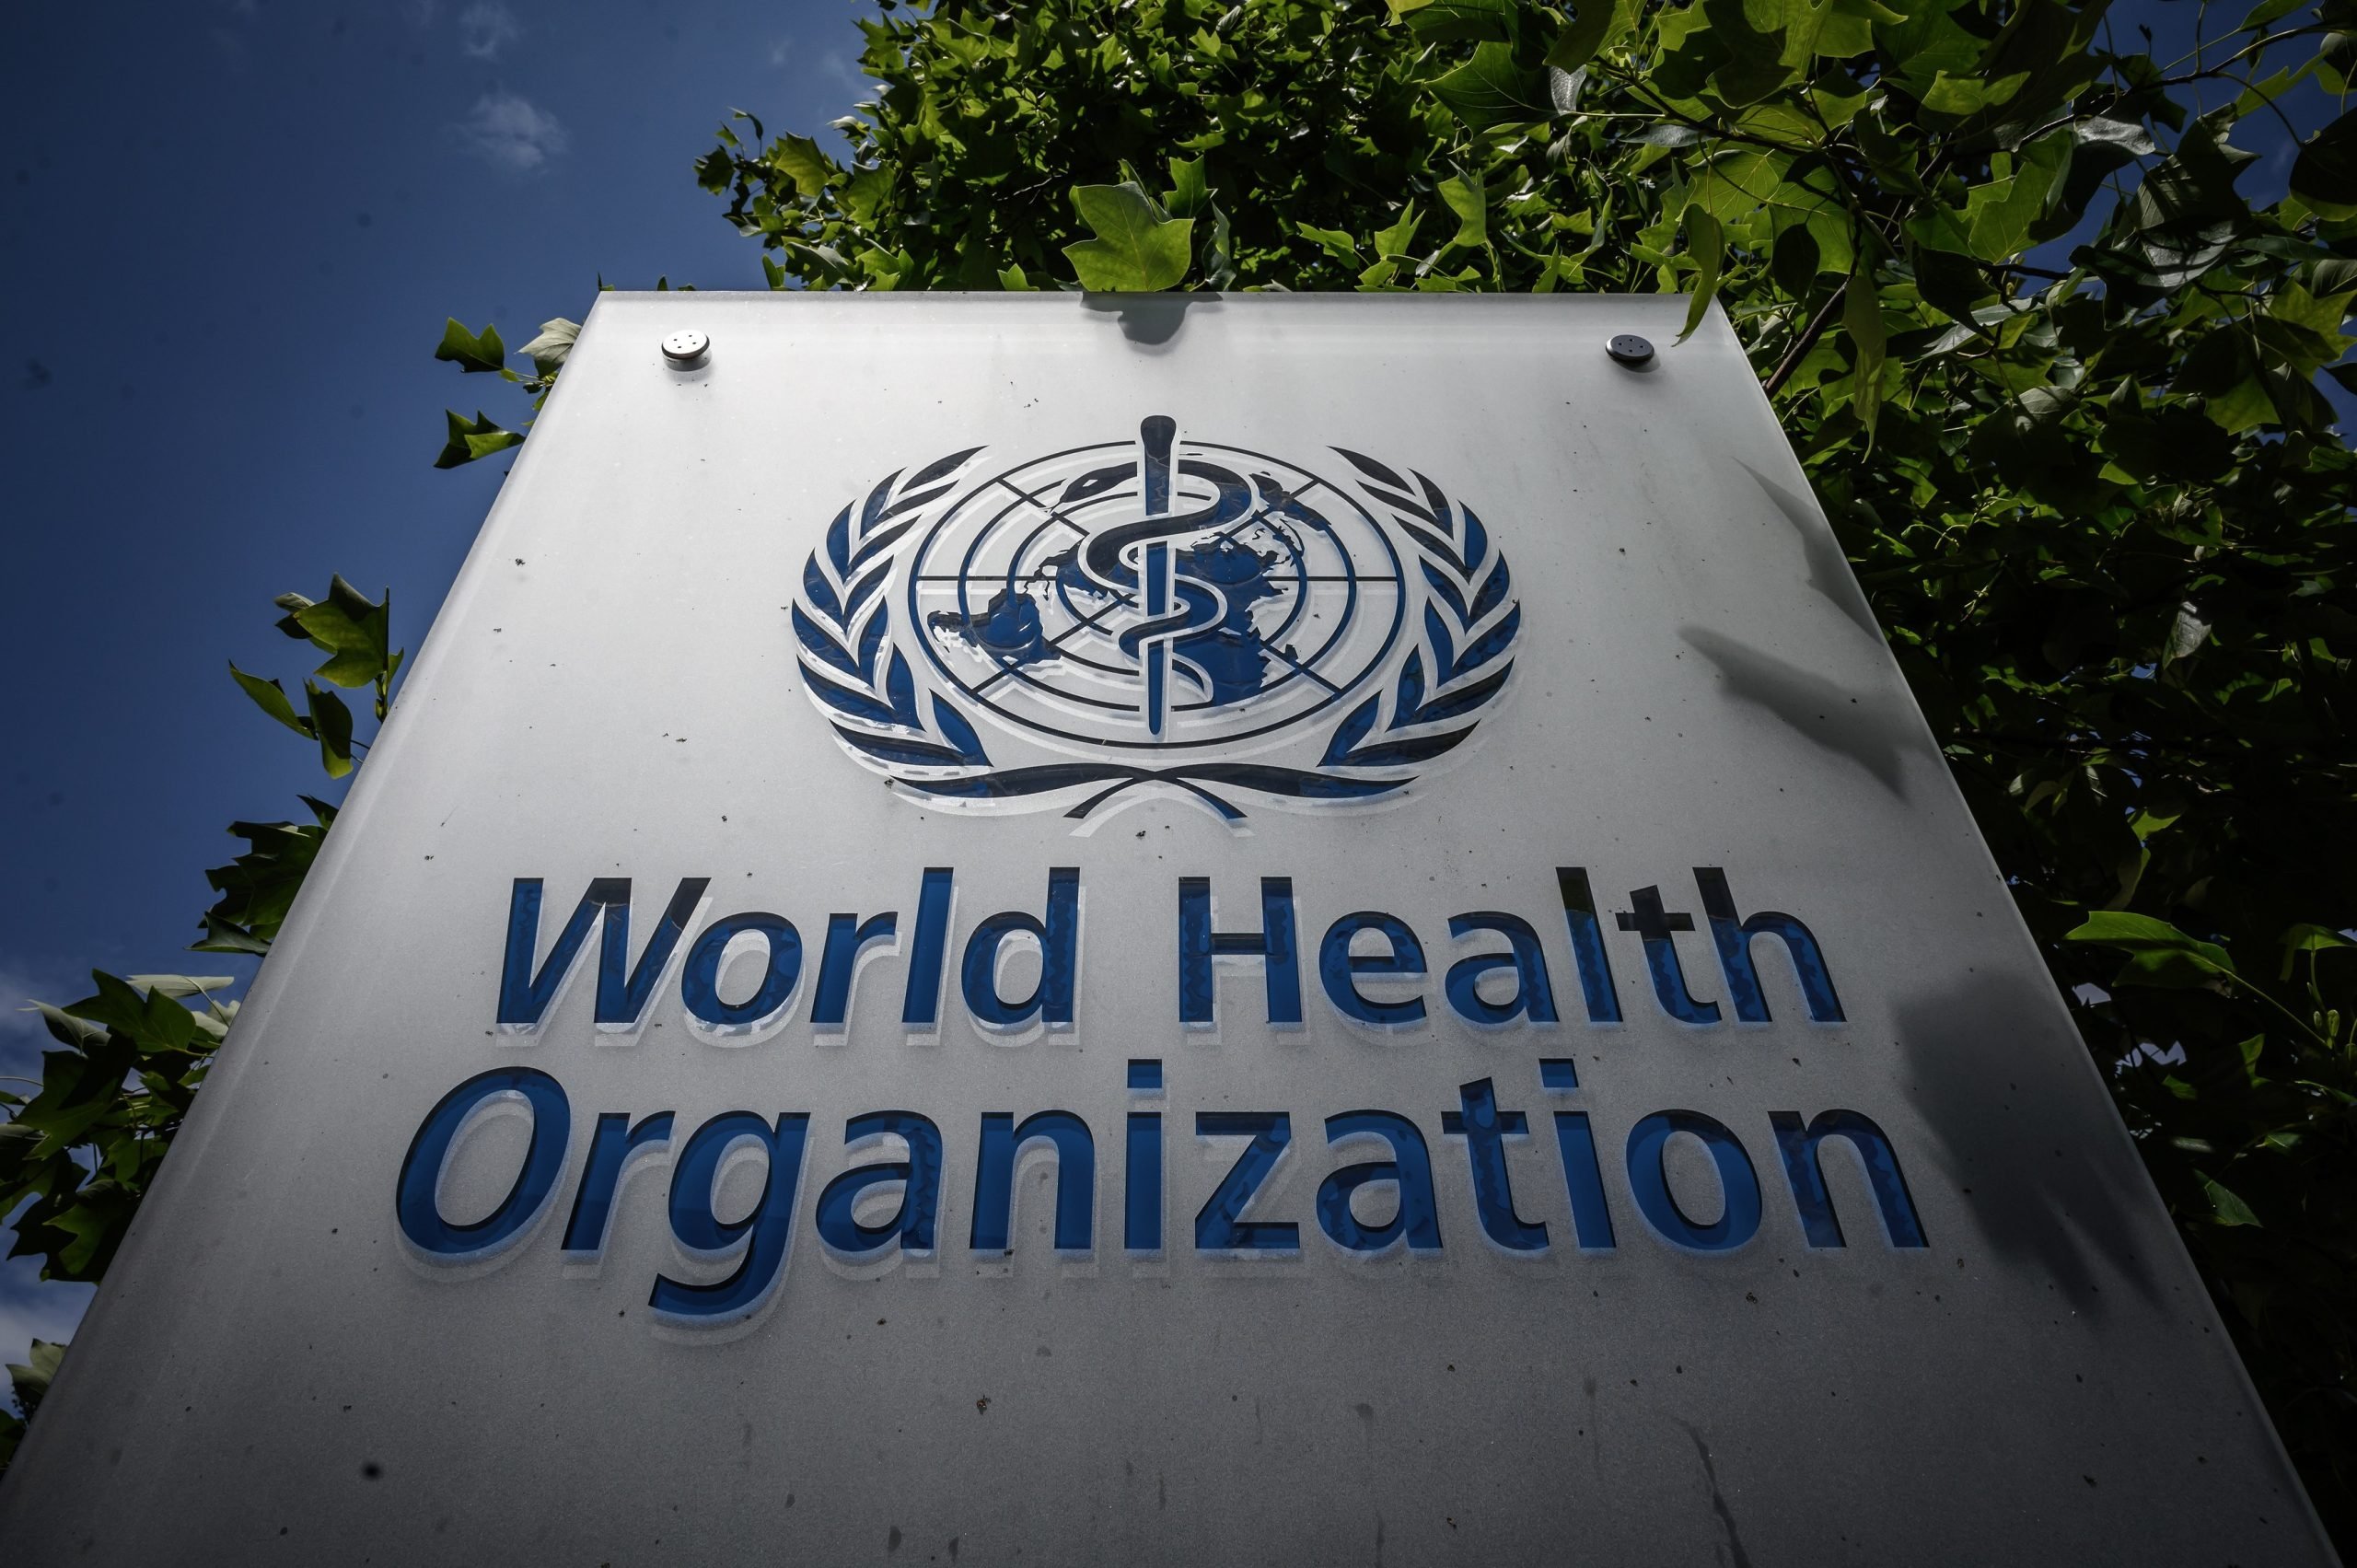 Dr. Tedros Adhanom Ghebreyesus, directorul general al OMS: ”Sănătatea este un drept al omului fundamental. Nu este un lux